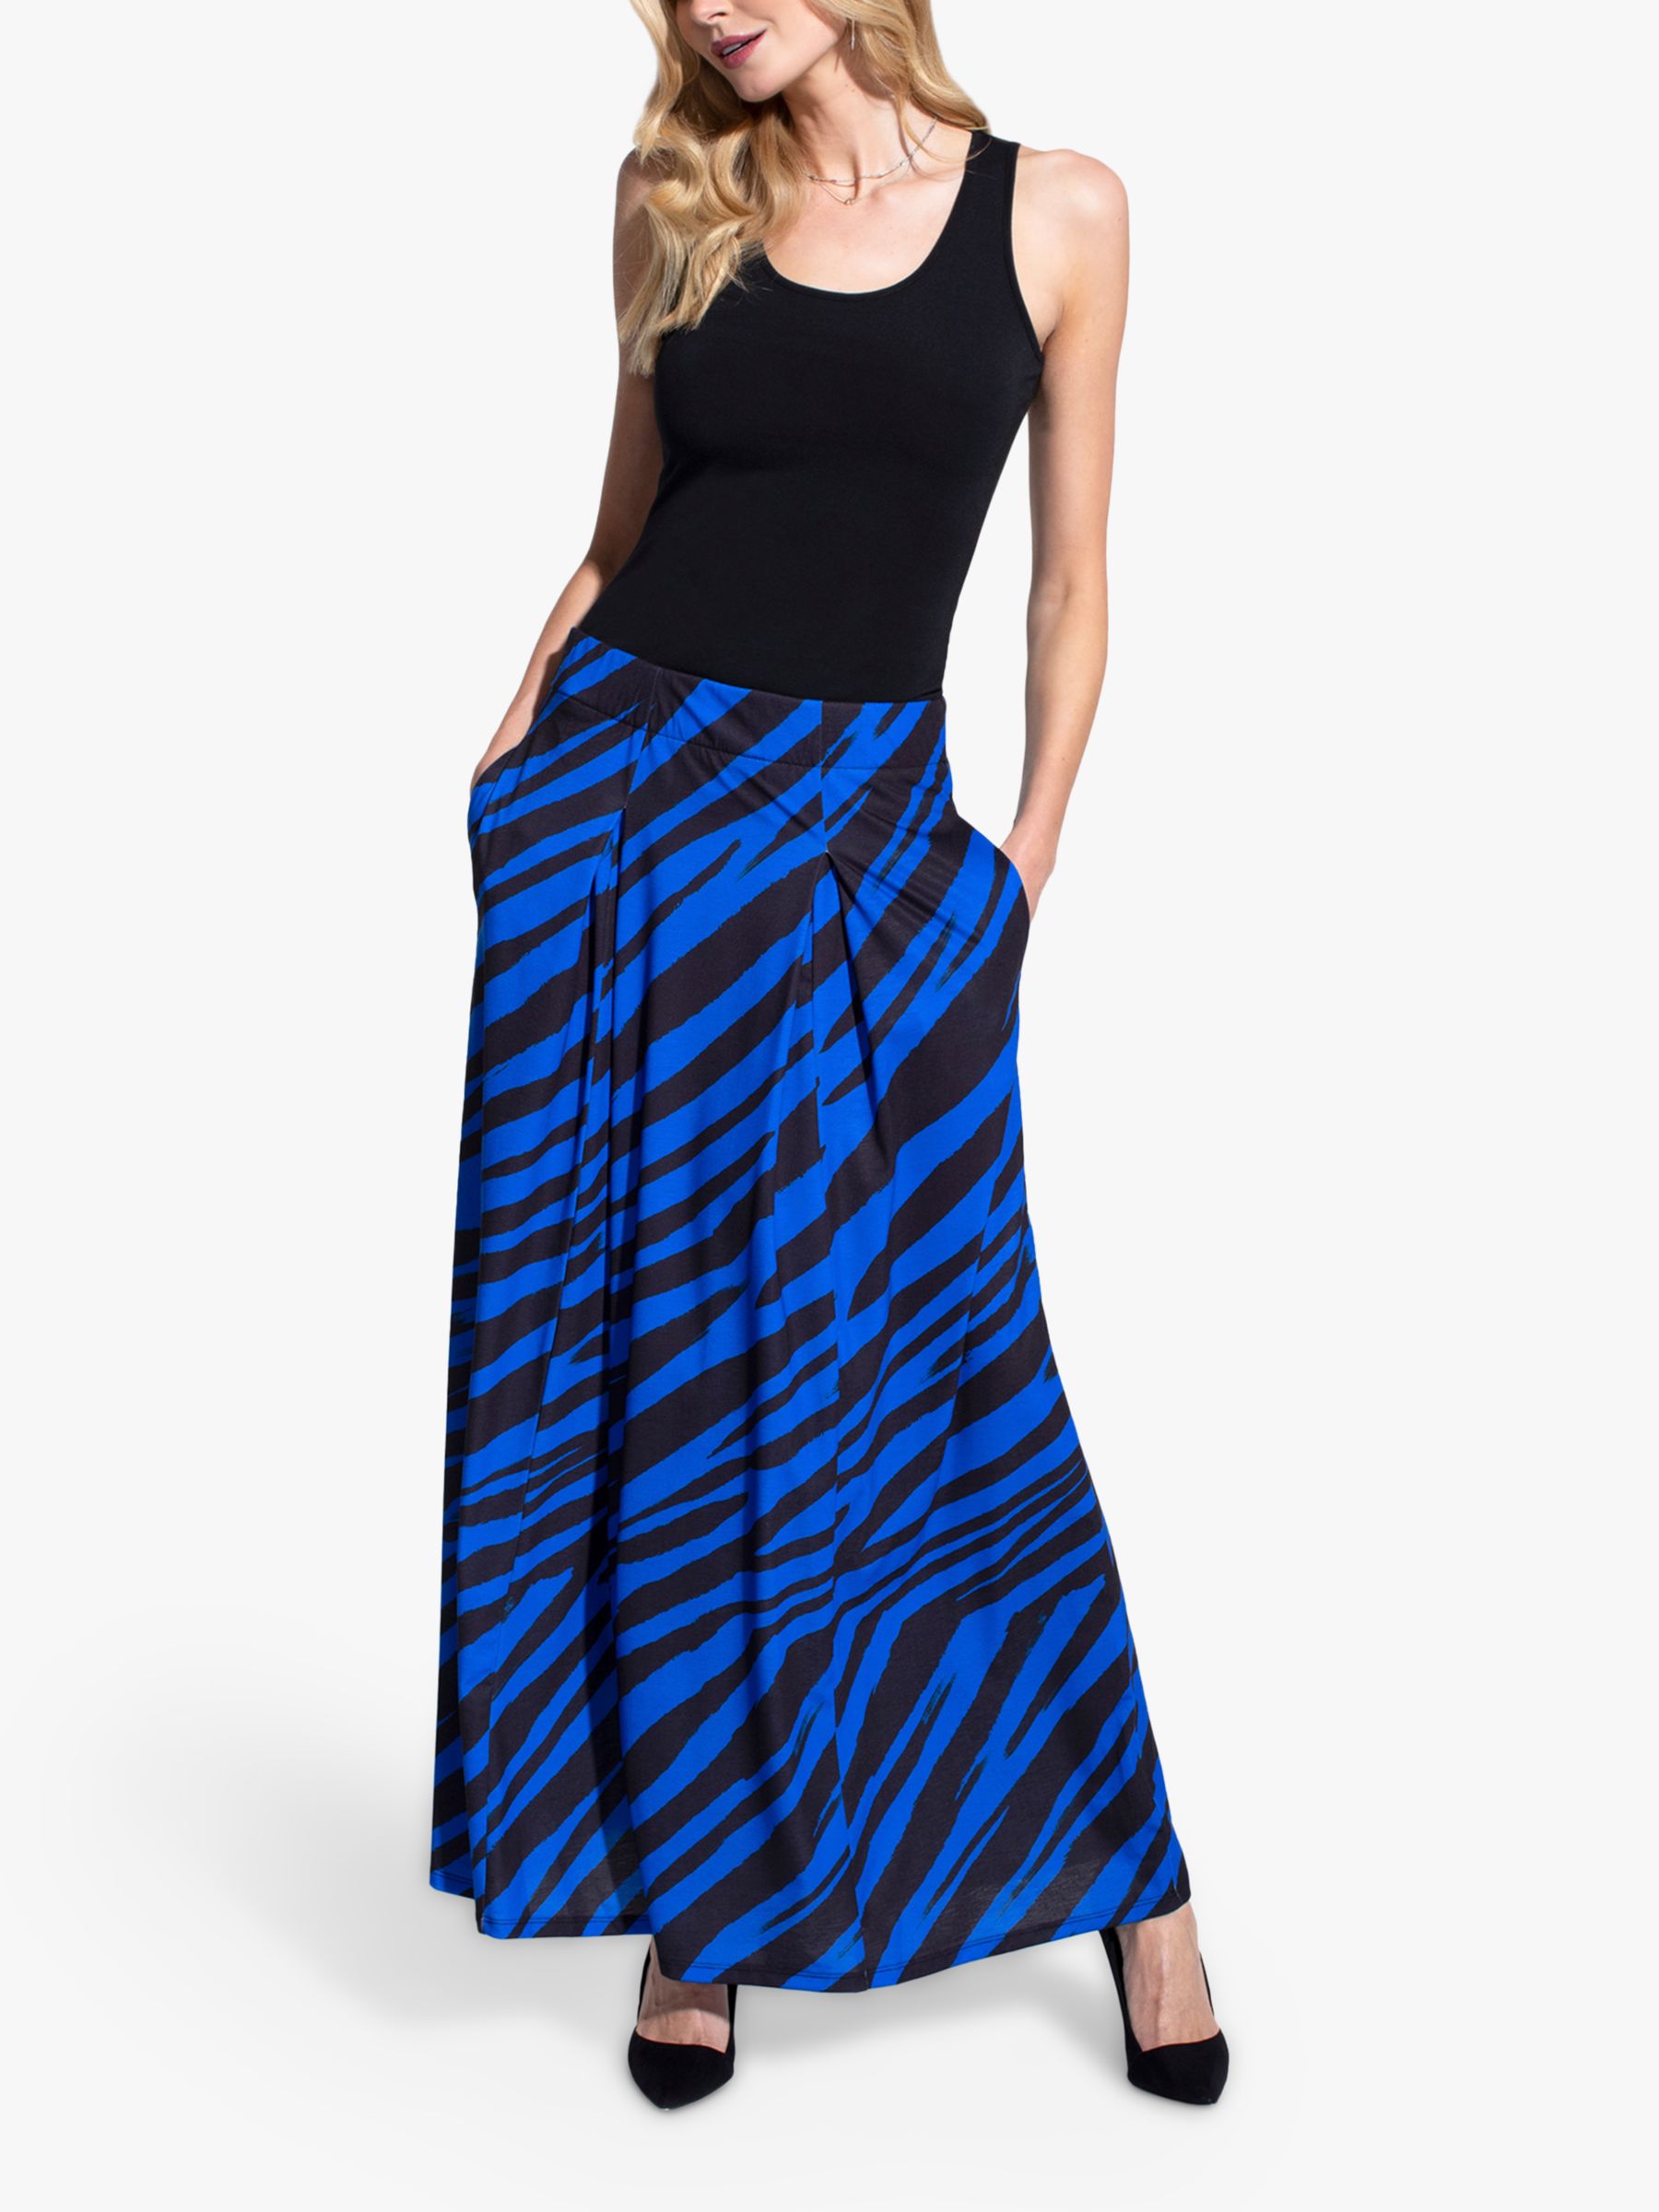 HotSquash Animal Box Pleat Maxi Skirt, Bright Blue/Black, 8